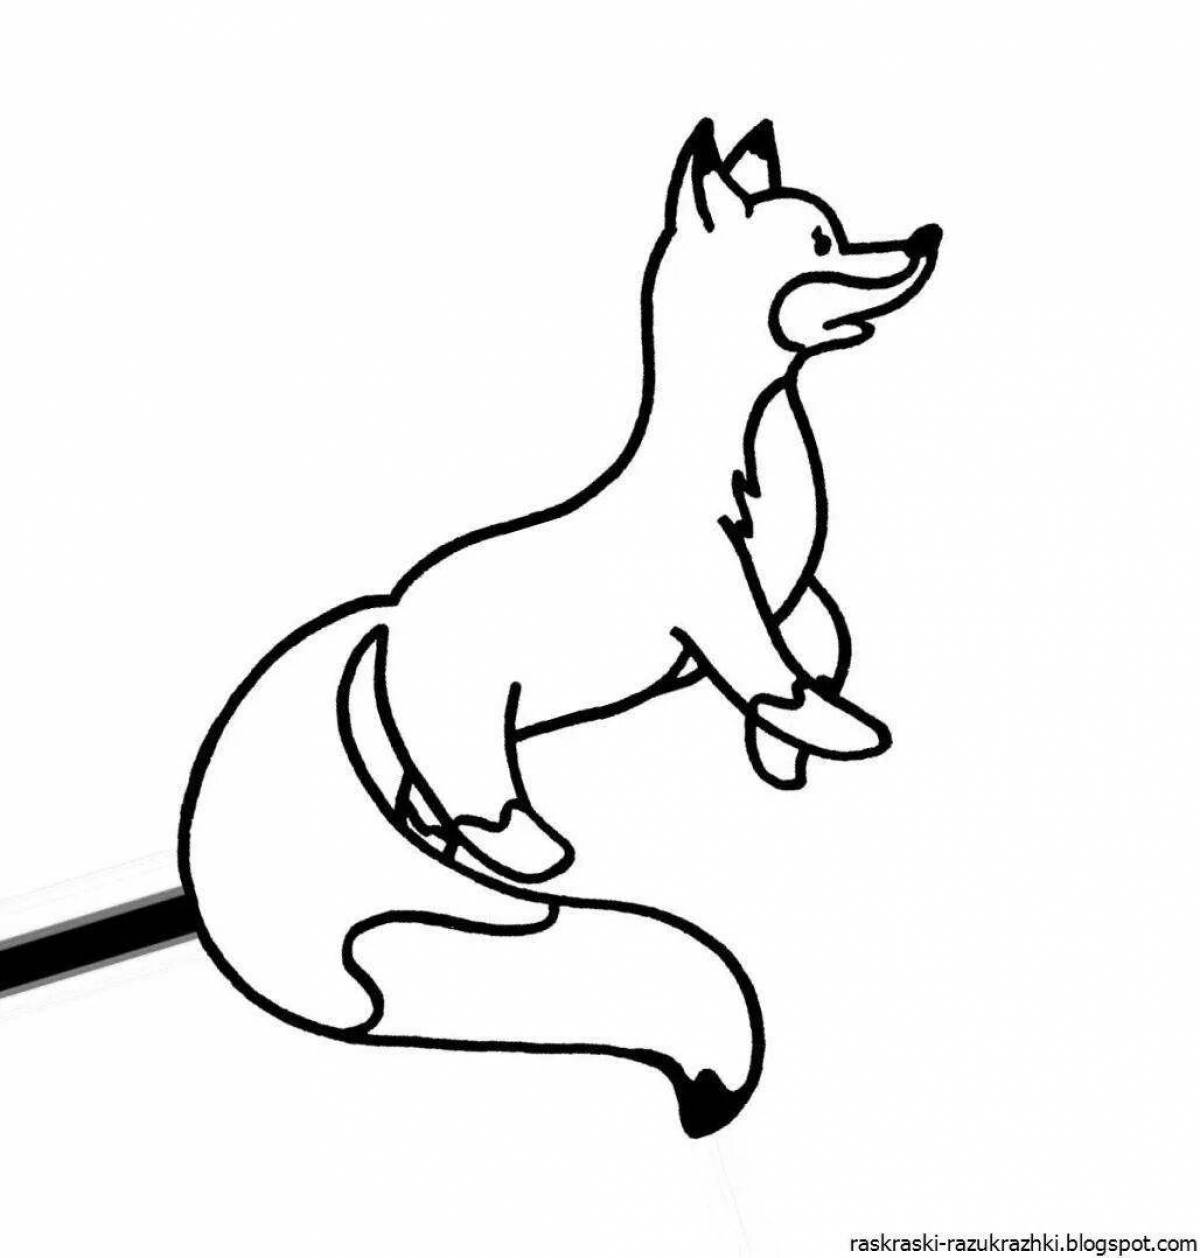 Joyful fox drawing for kids